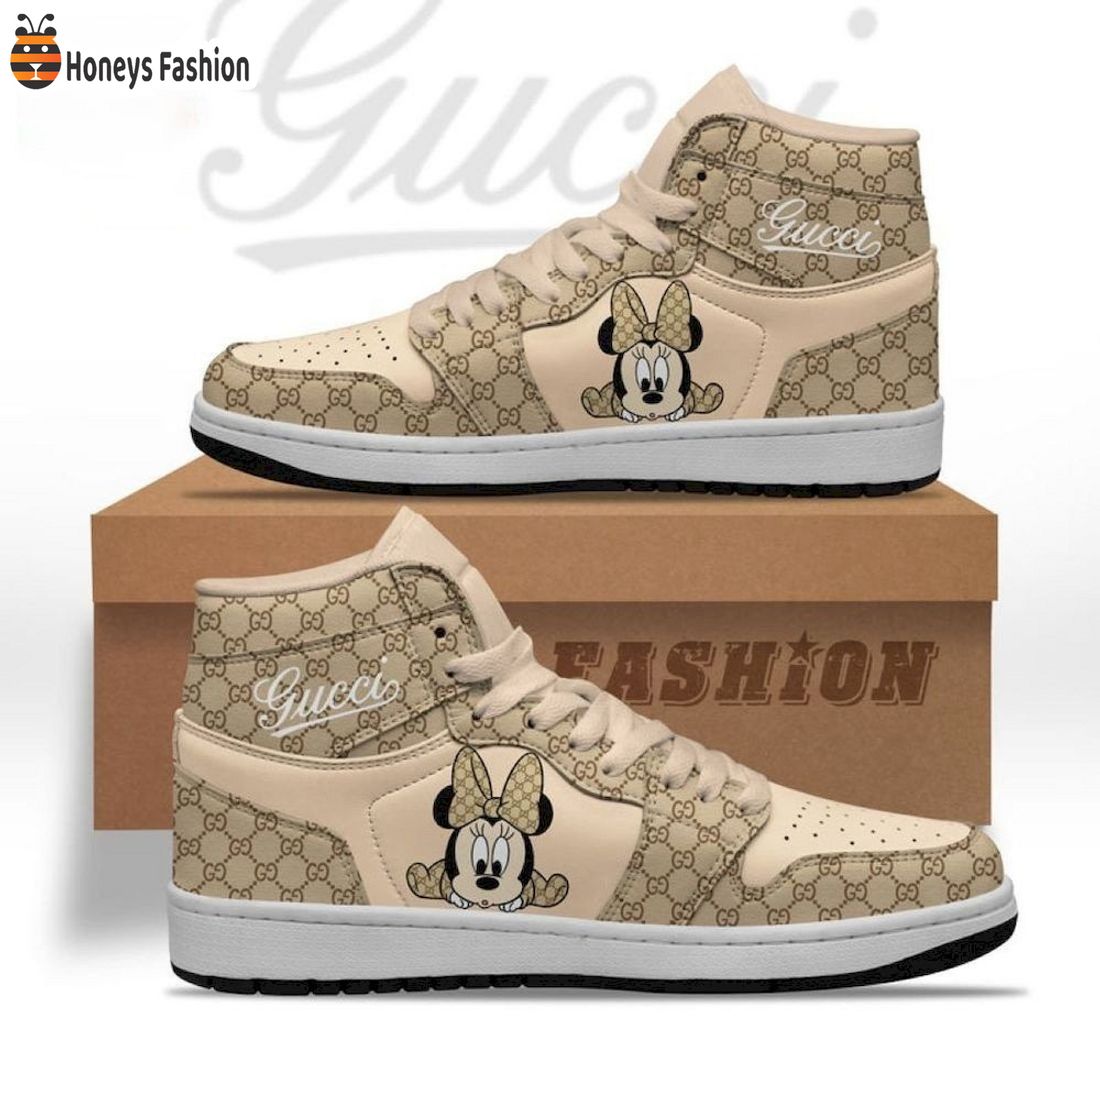 Gucci Minnie Mouse Air Jordan 1 Sneakers